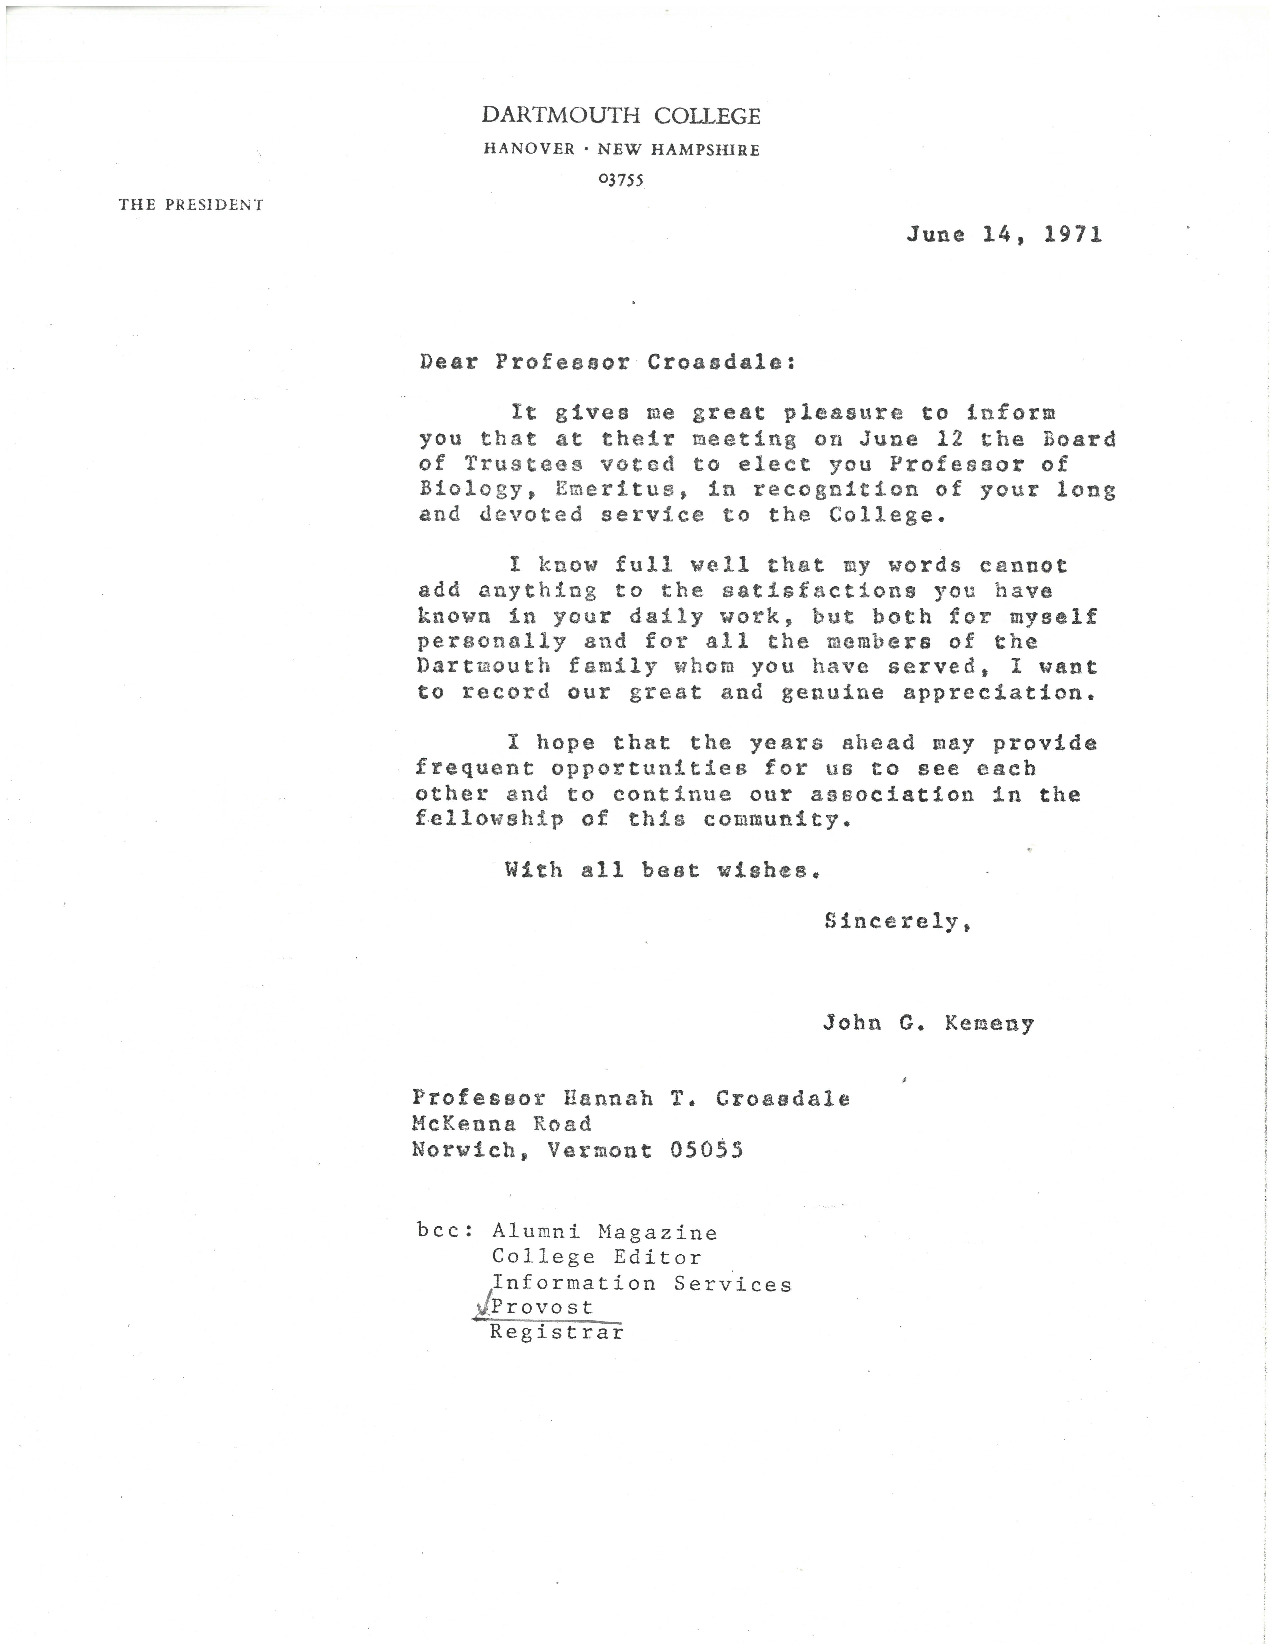 Letter from President Kemeny to Professor Croasdale, Jun. 14, 1971